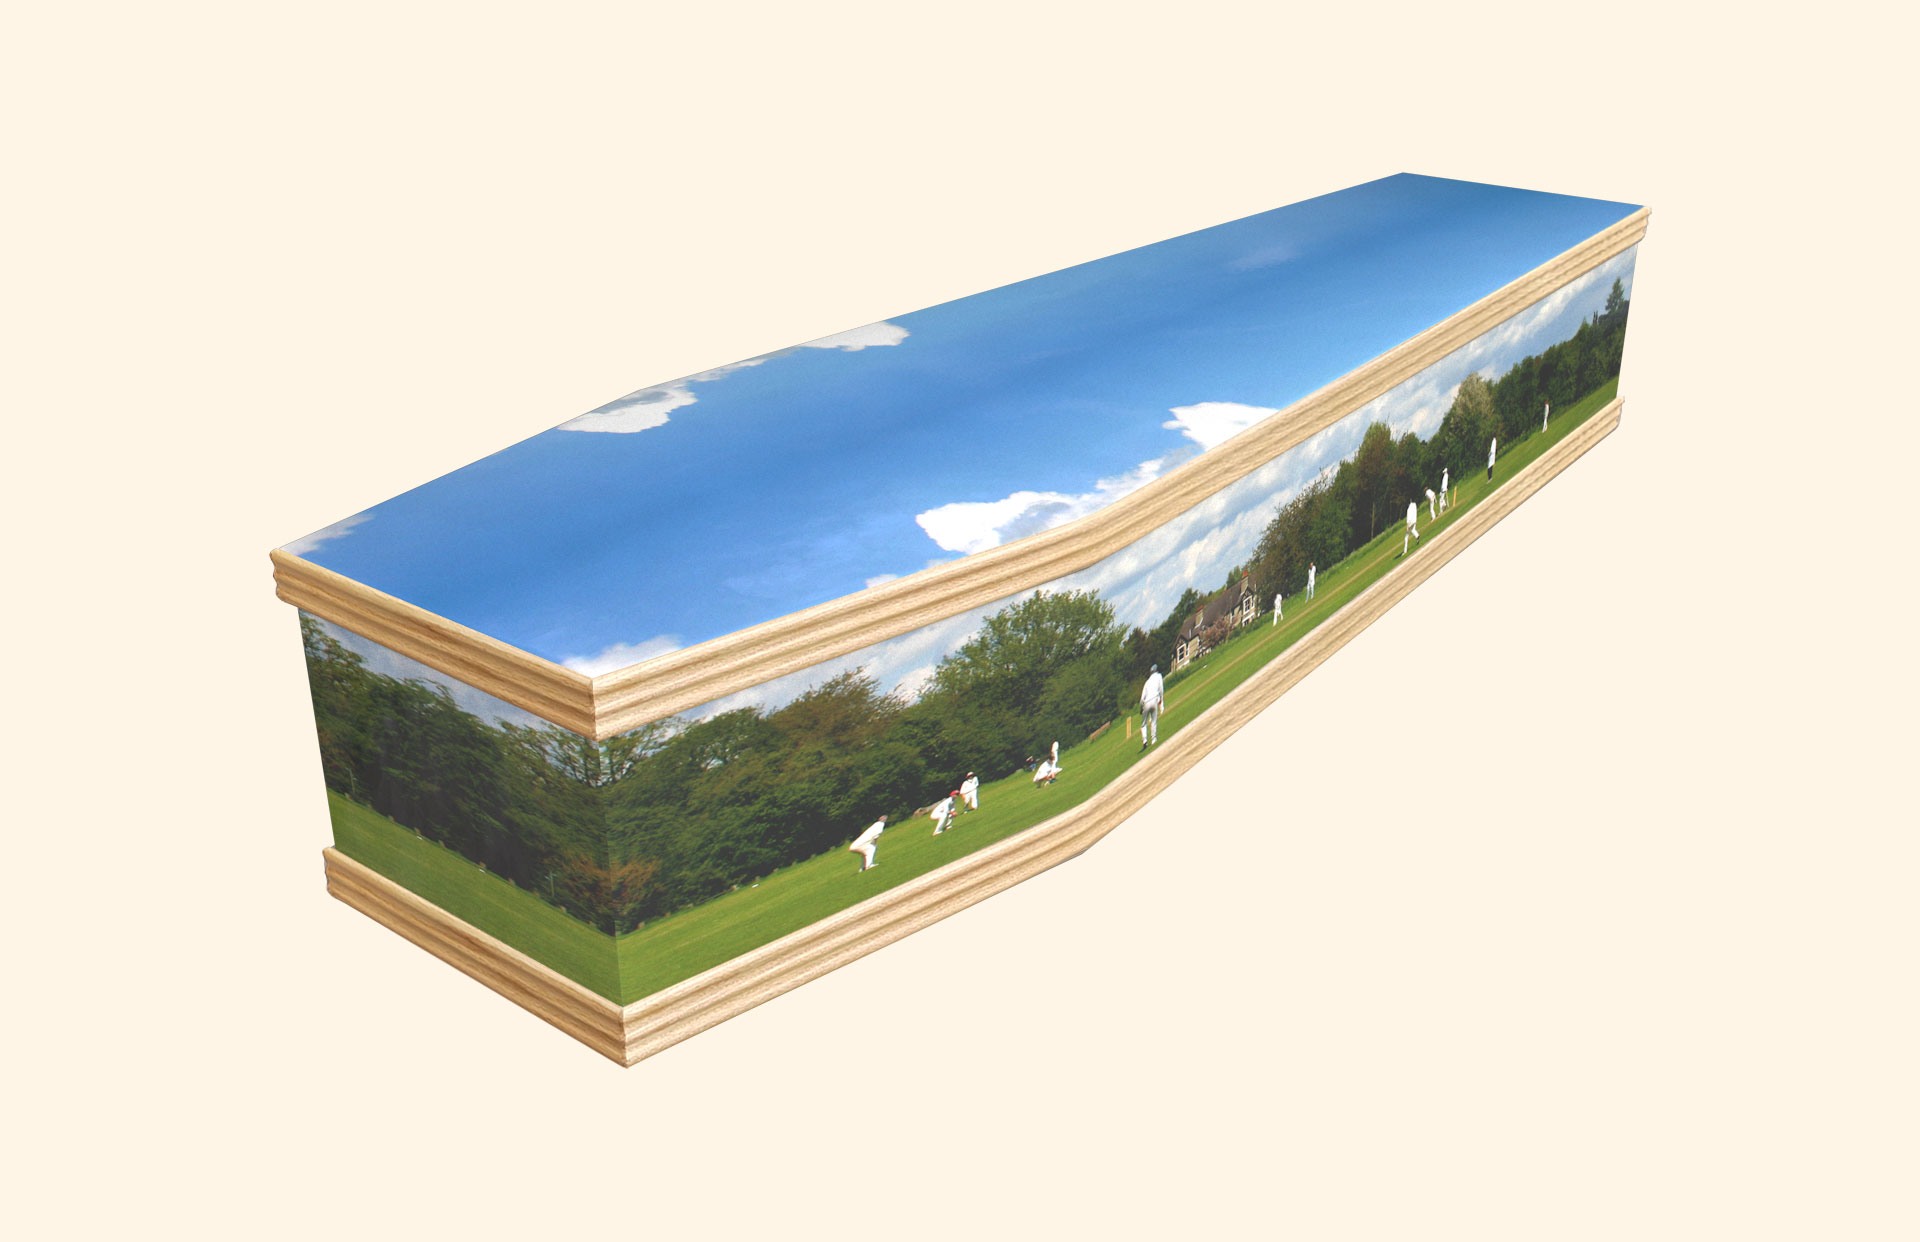 Village Cricket design on a classic coffin